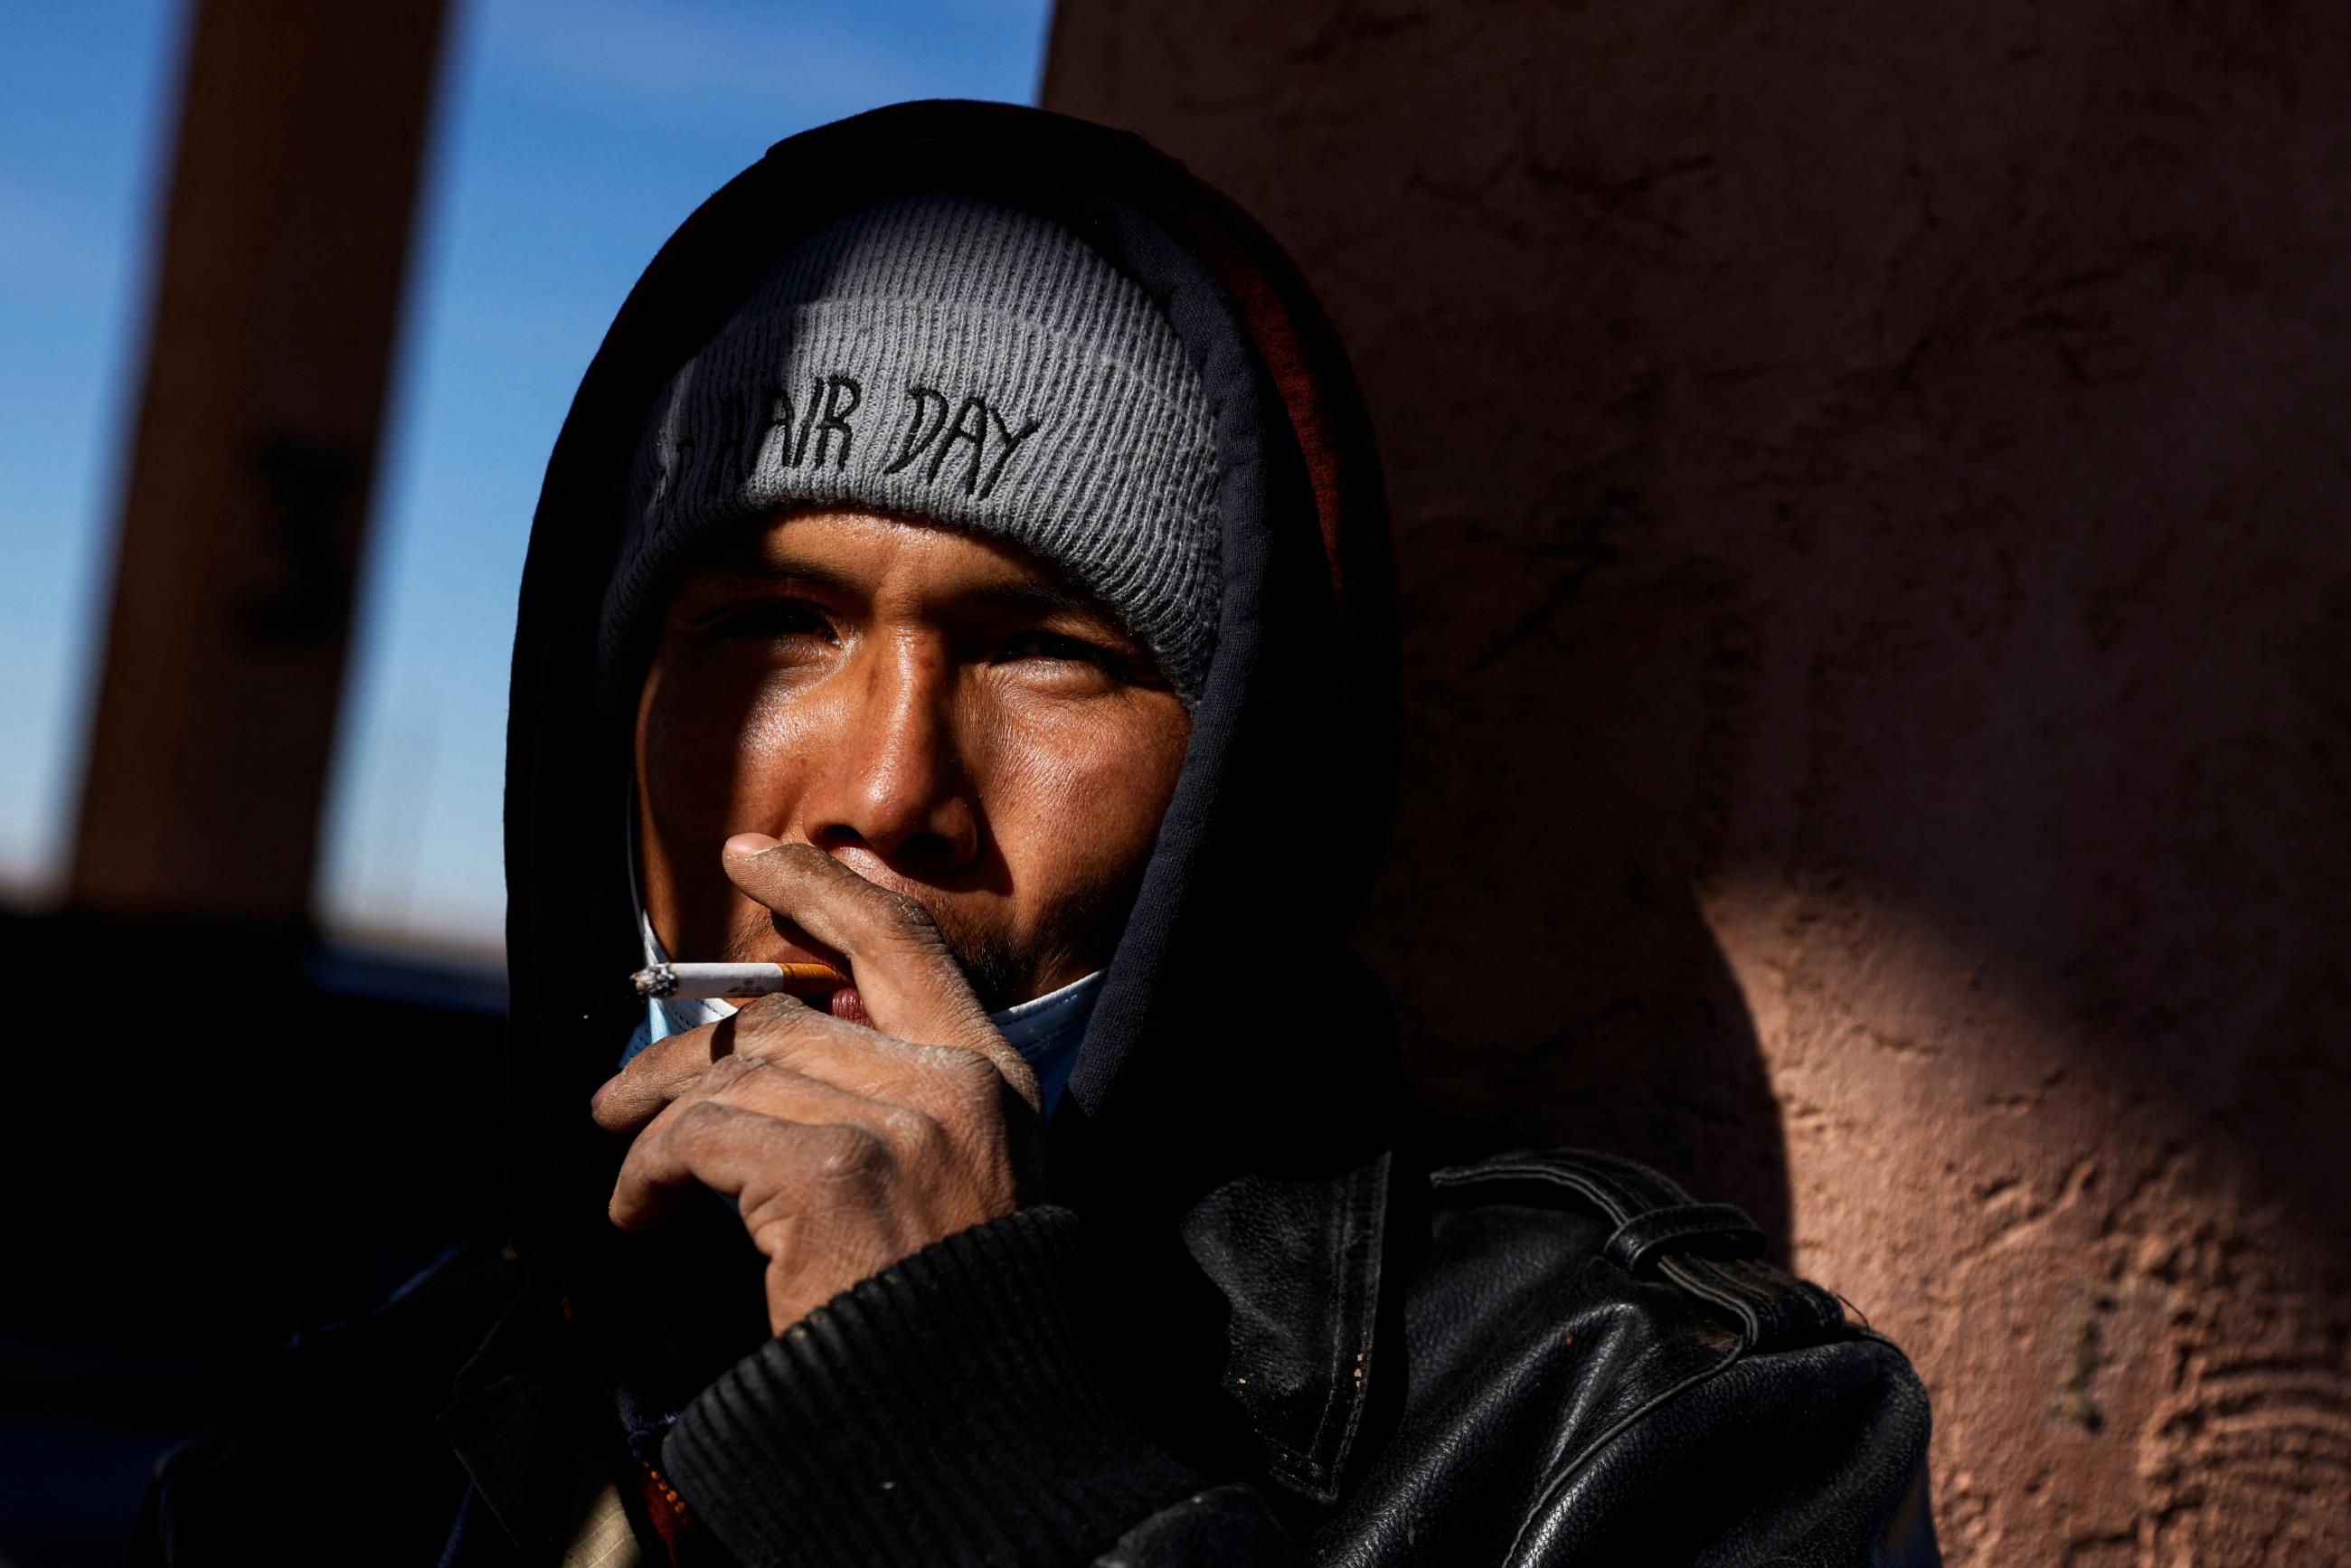 A man smokes a cigarette outside.